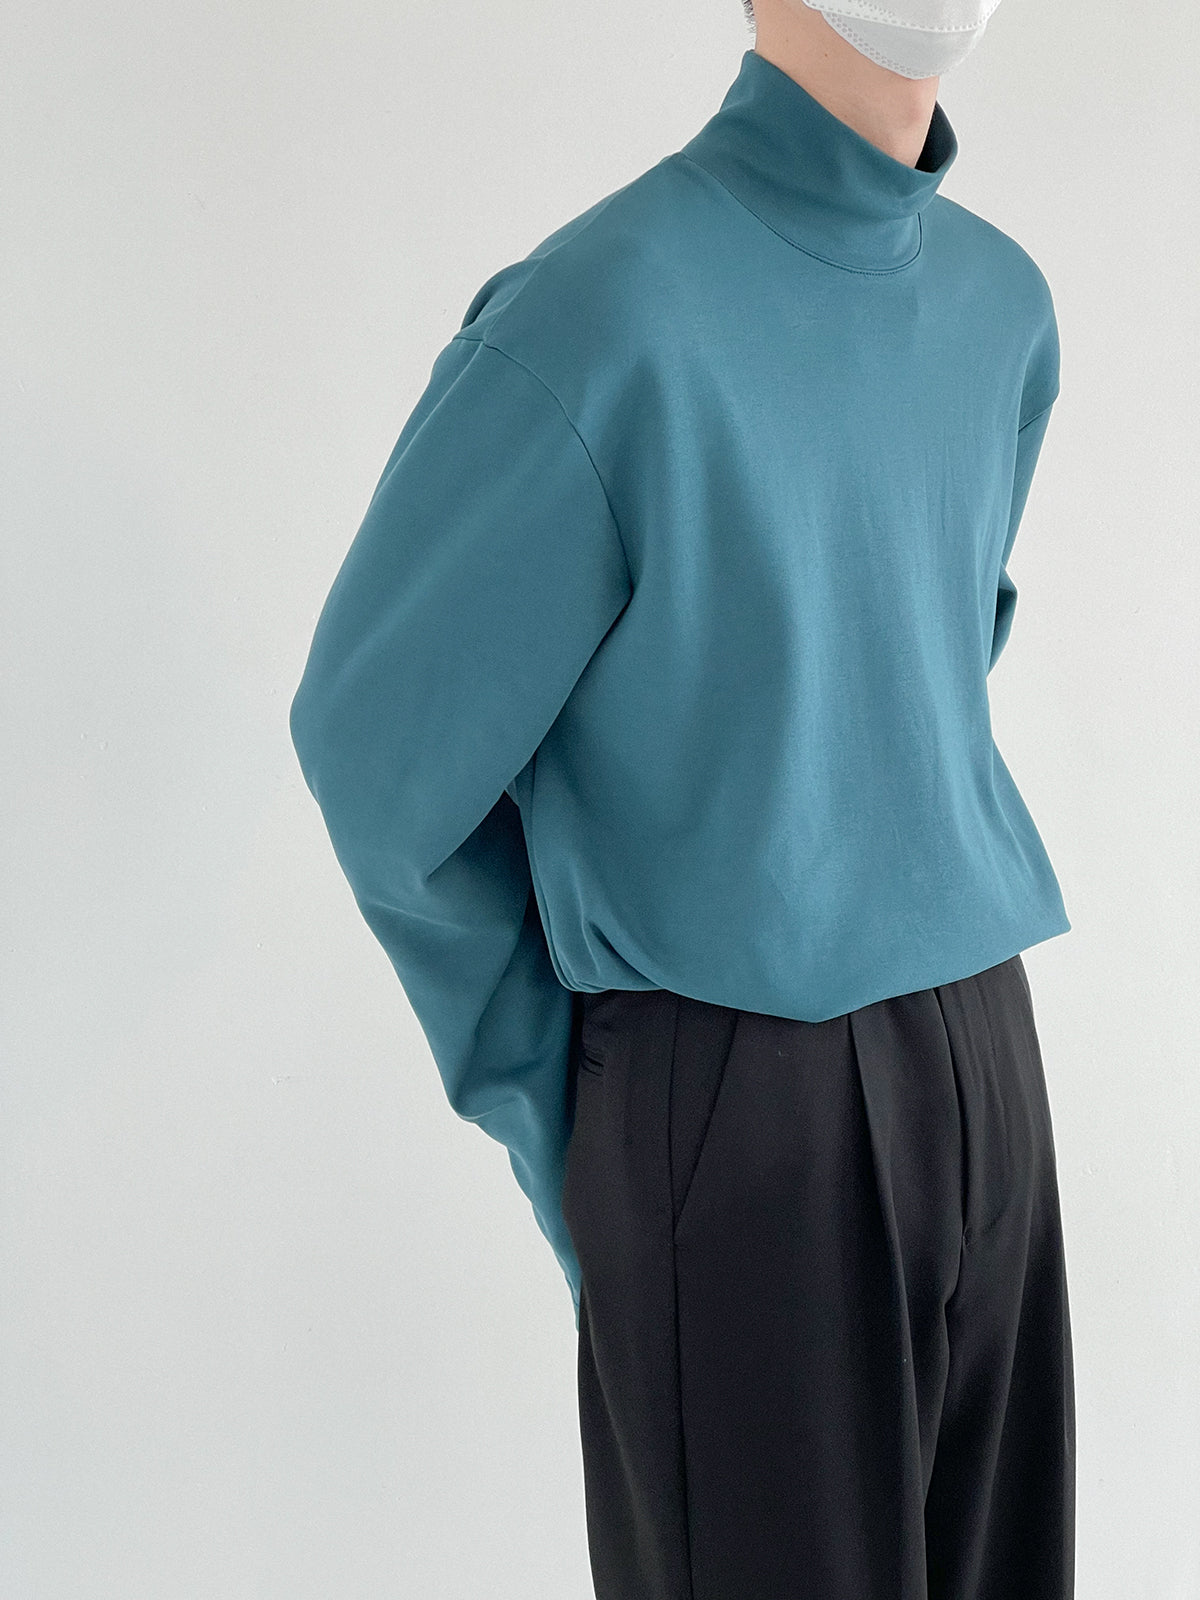 [Korean Style] Long-Sleeved Pullover Turtleneck Sweatshirts